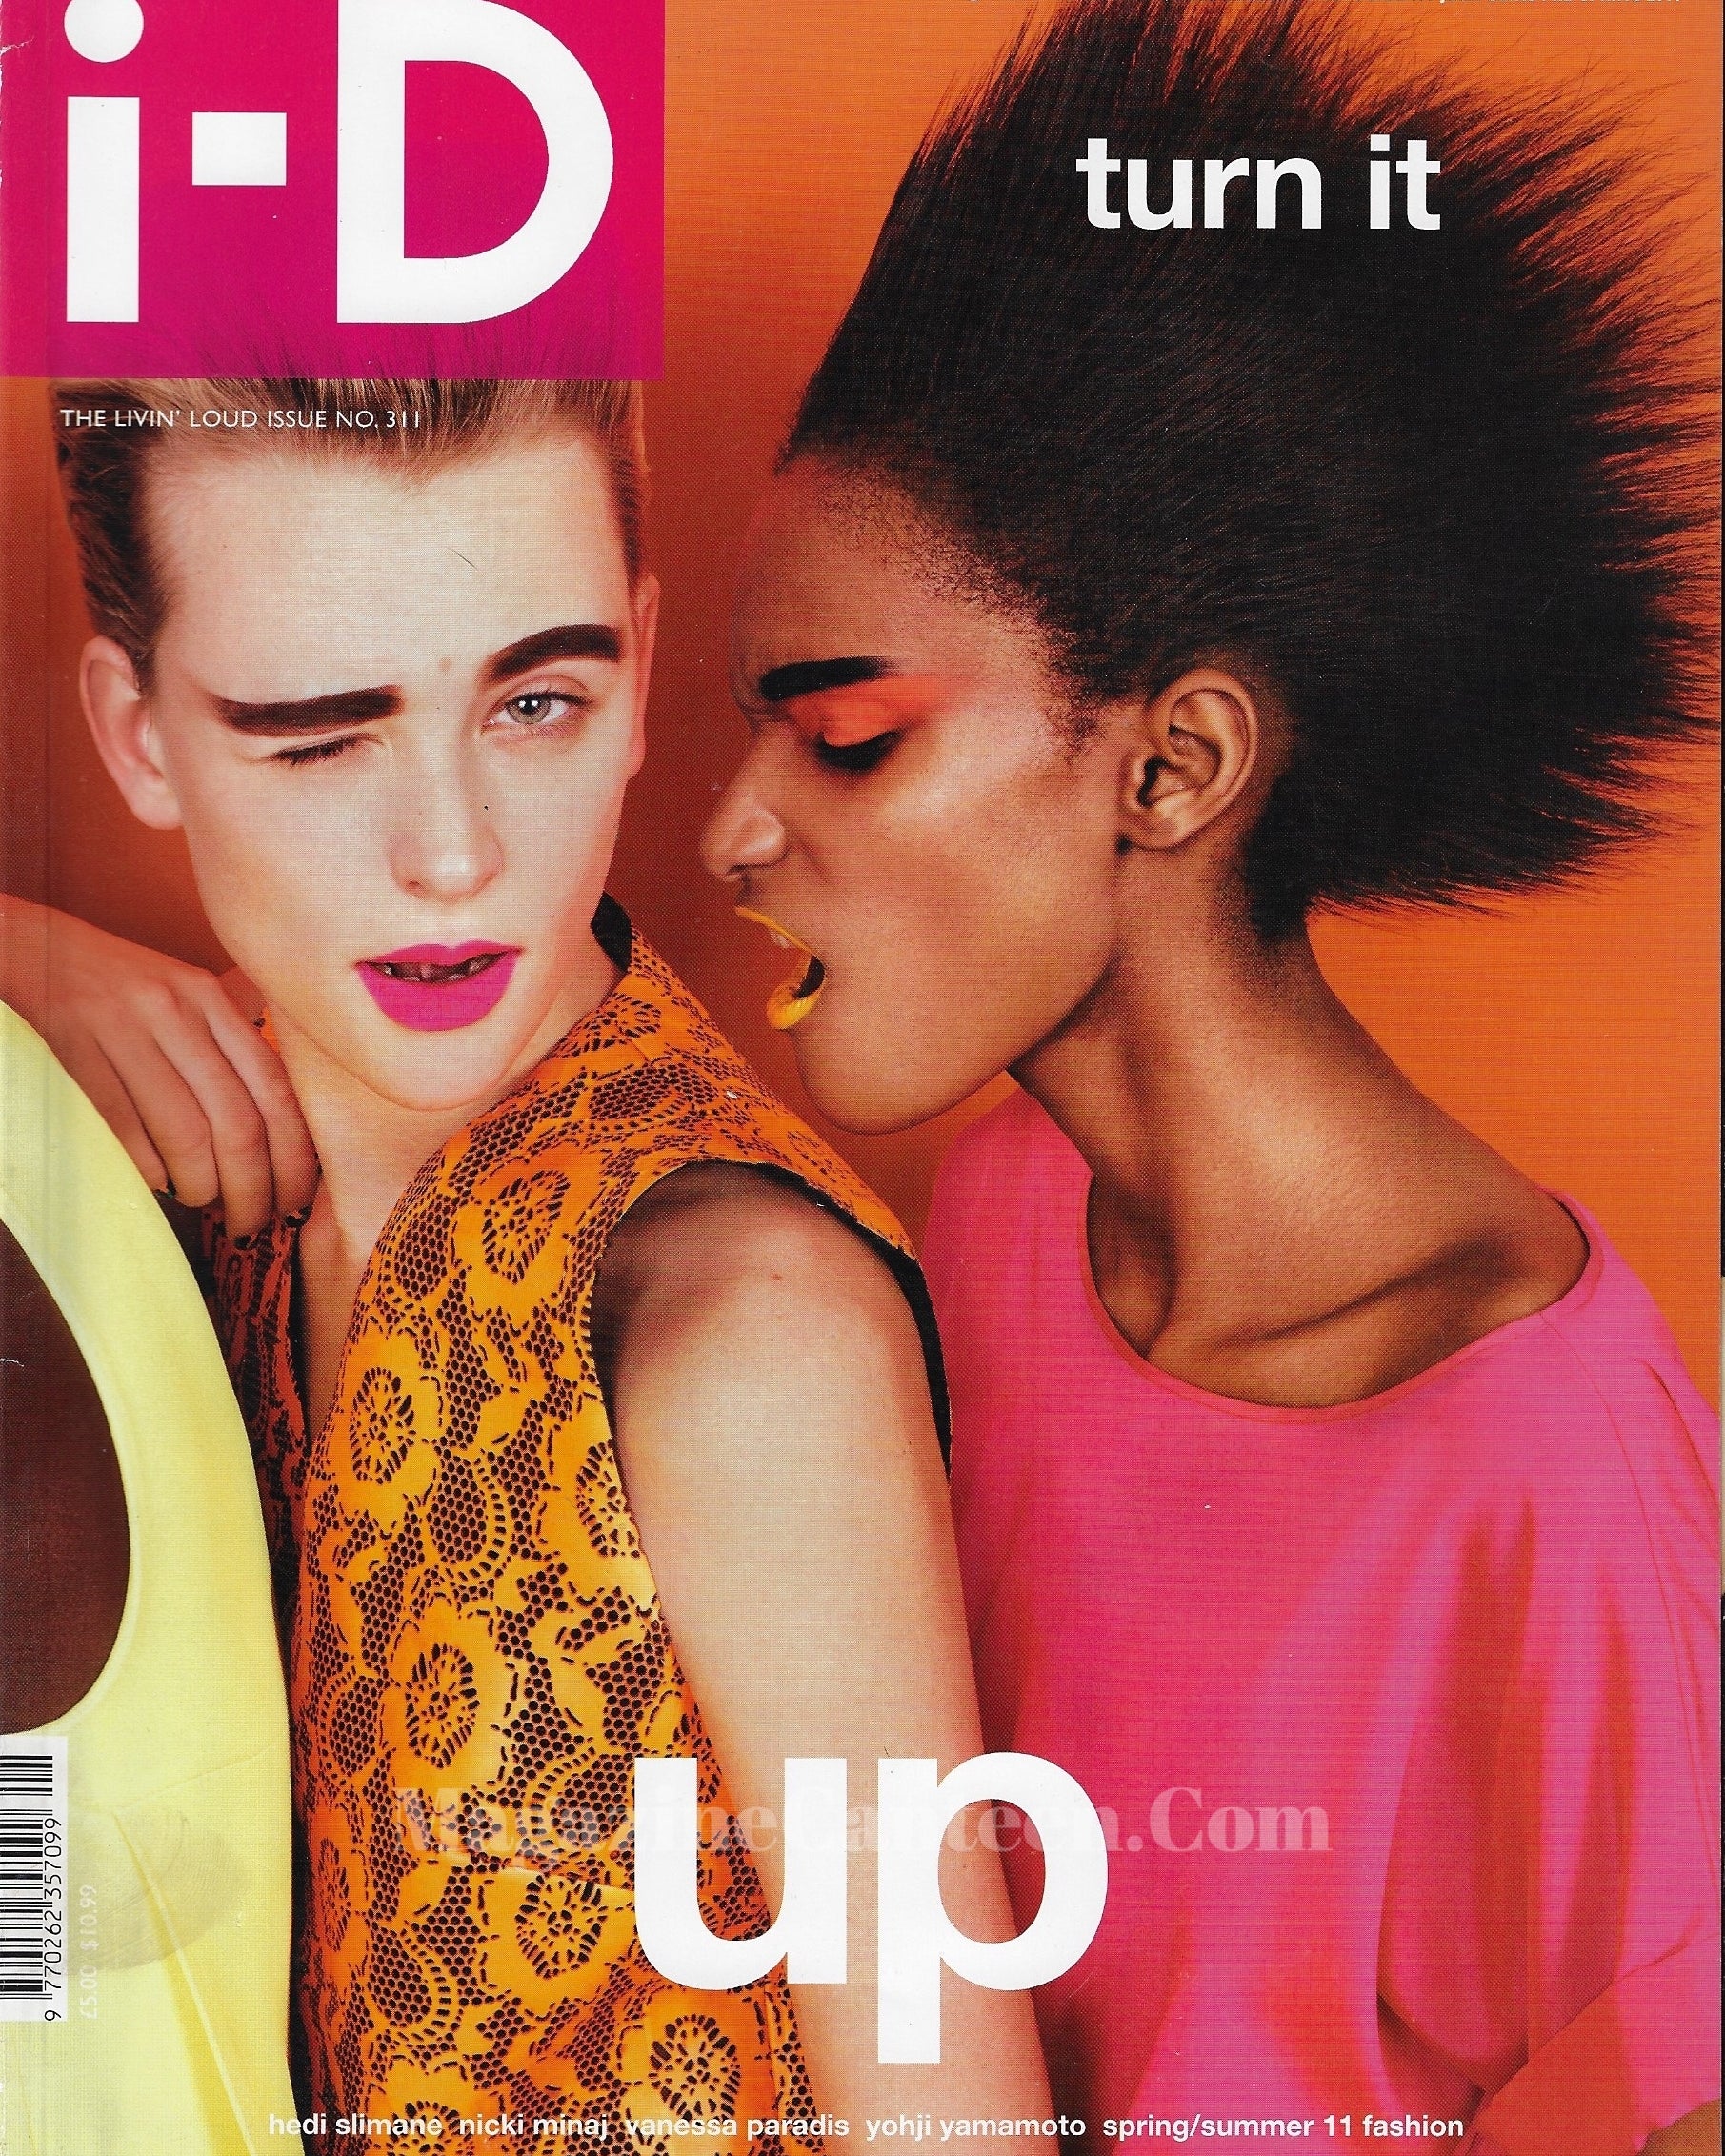 I-D Magazine 311 - Milou & Rose 2011